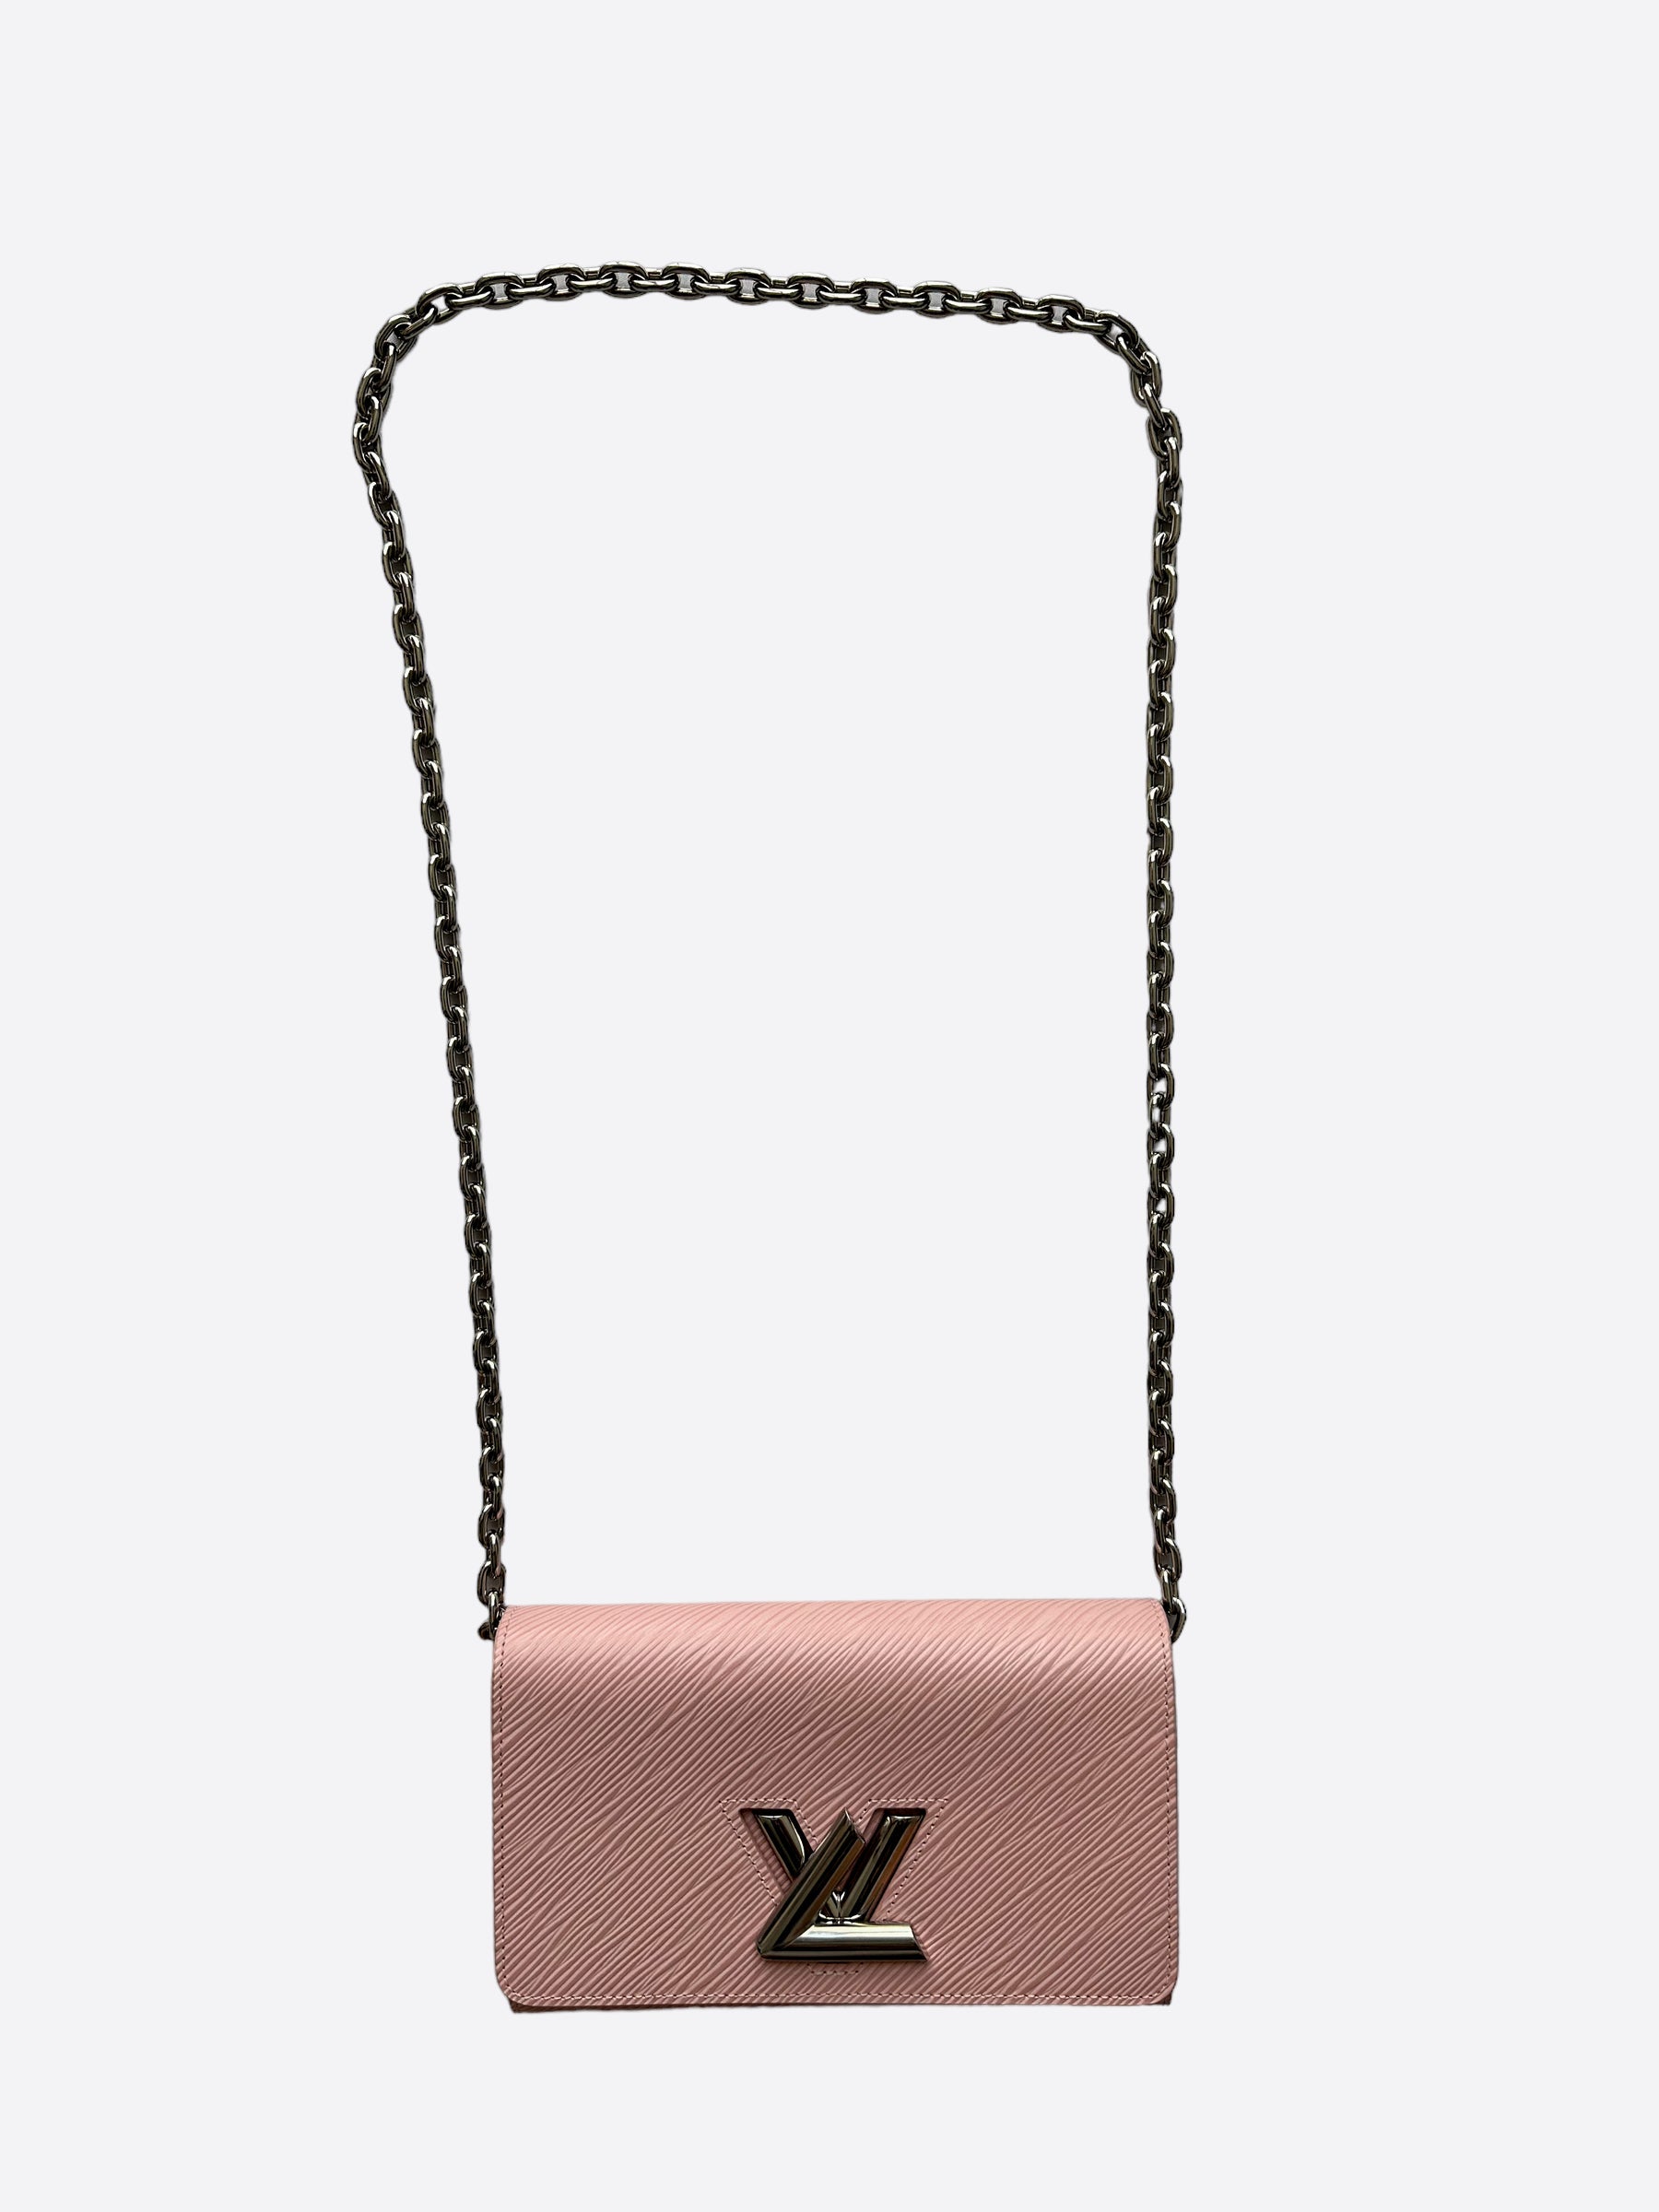 Louis Vuitton Pink Epi Leather Twist Wallet On Chain